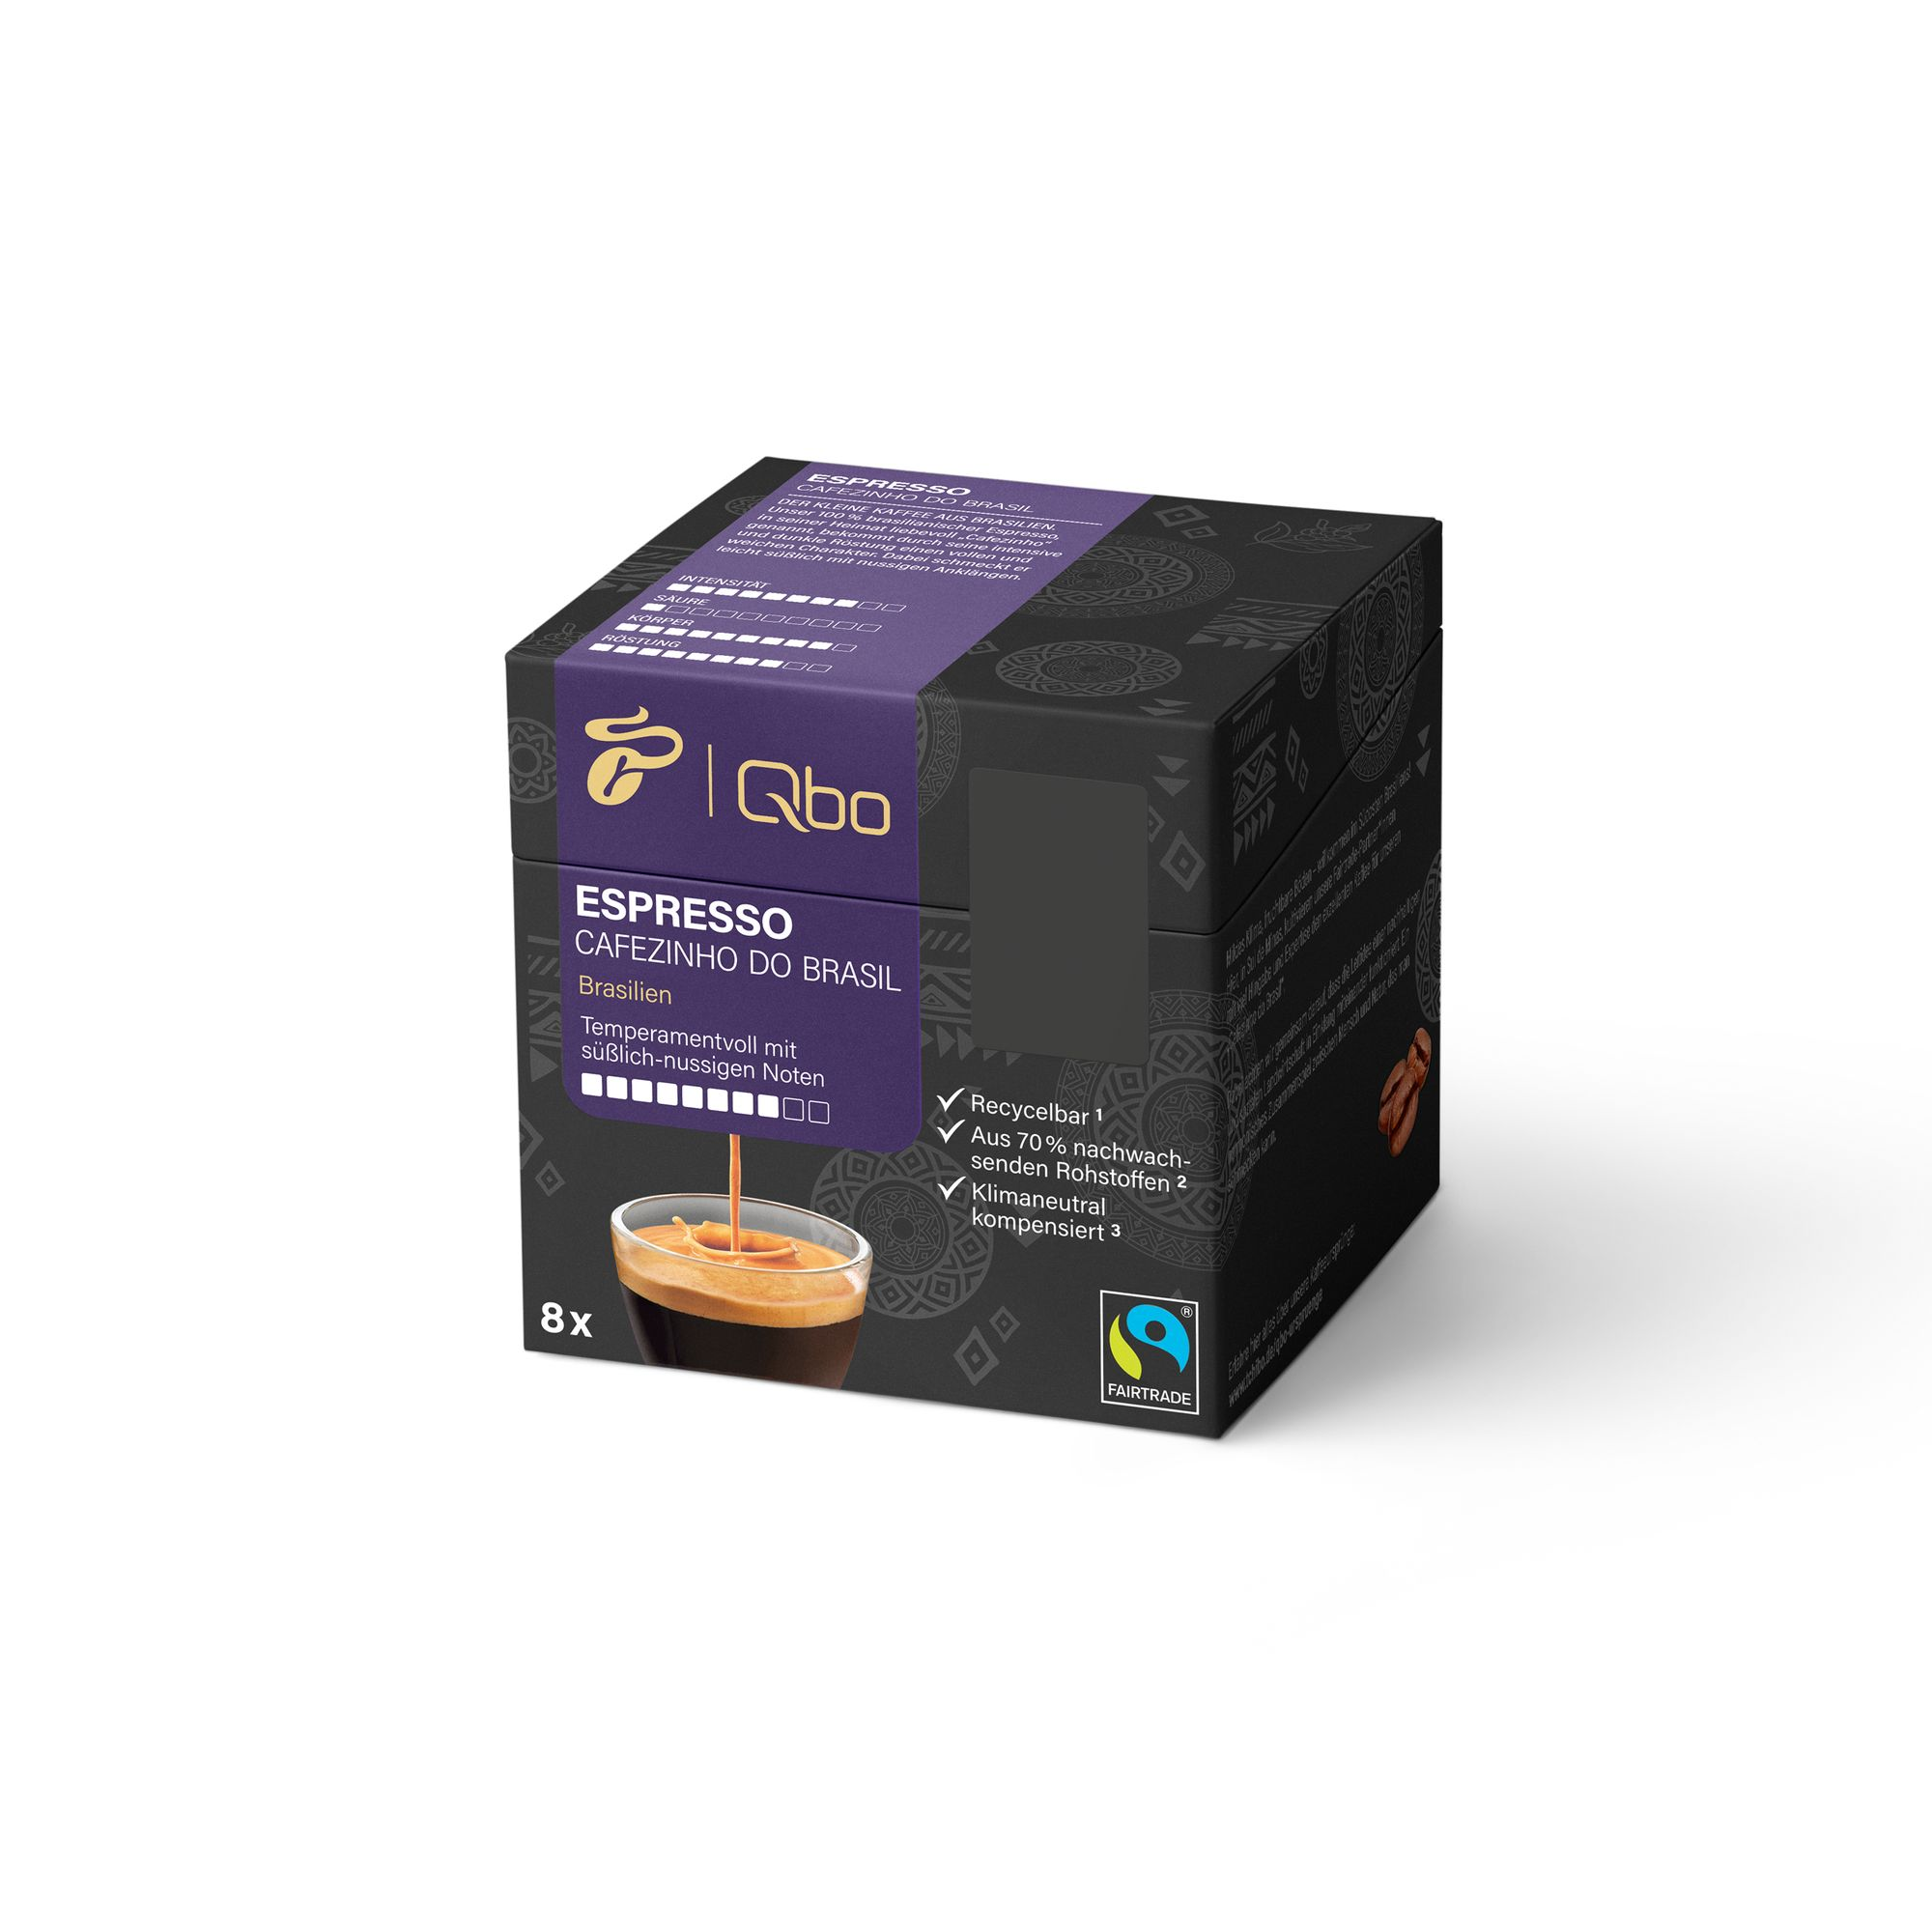 TCHIBO QBO 525778 Brasil Stück Qbo Espresso (Tchibo Kapselsystem) Kaffeekapseln do 8 Cafezinho